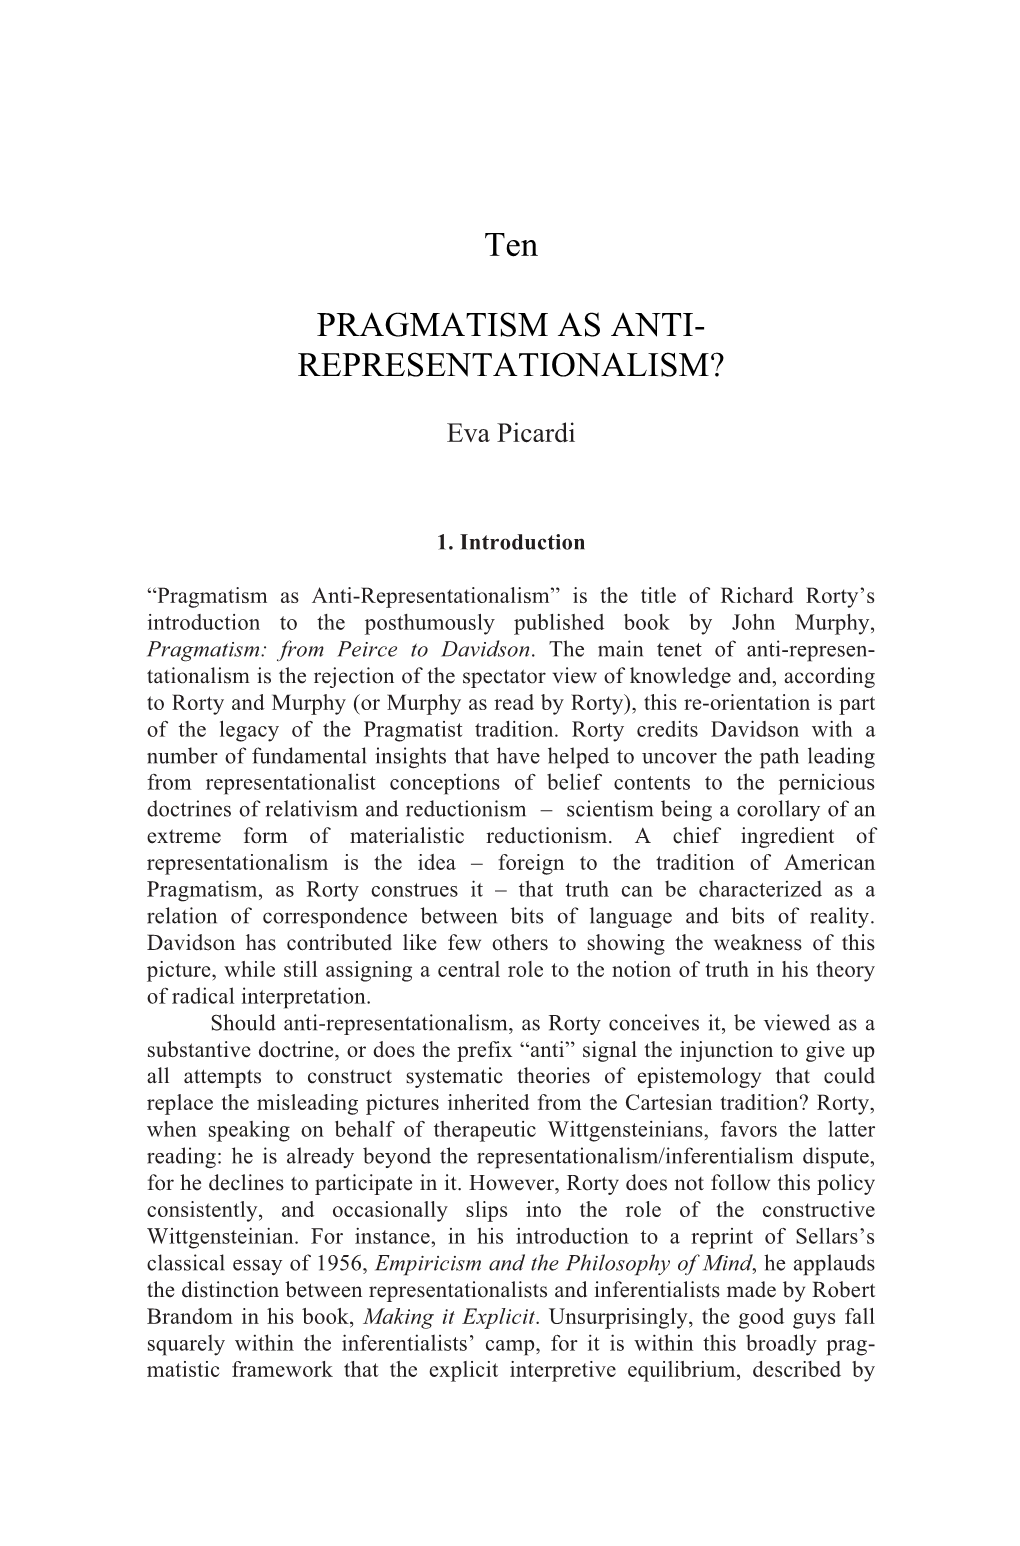 Ten PRAGMATISM AS ANTI- REPRESENTATIONALISM?